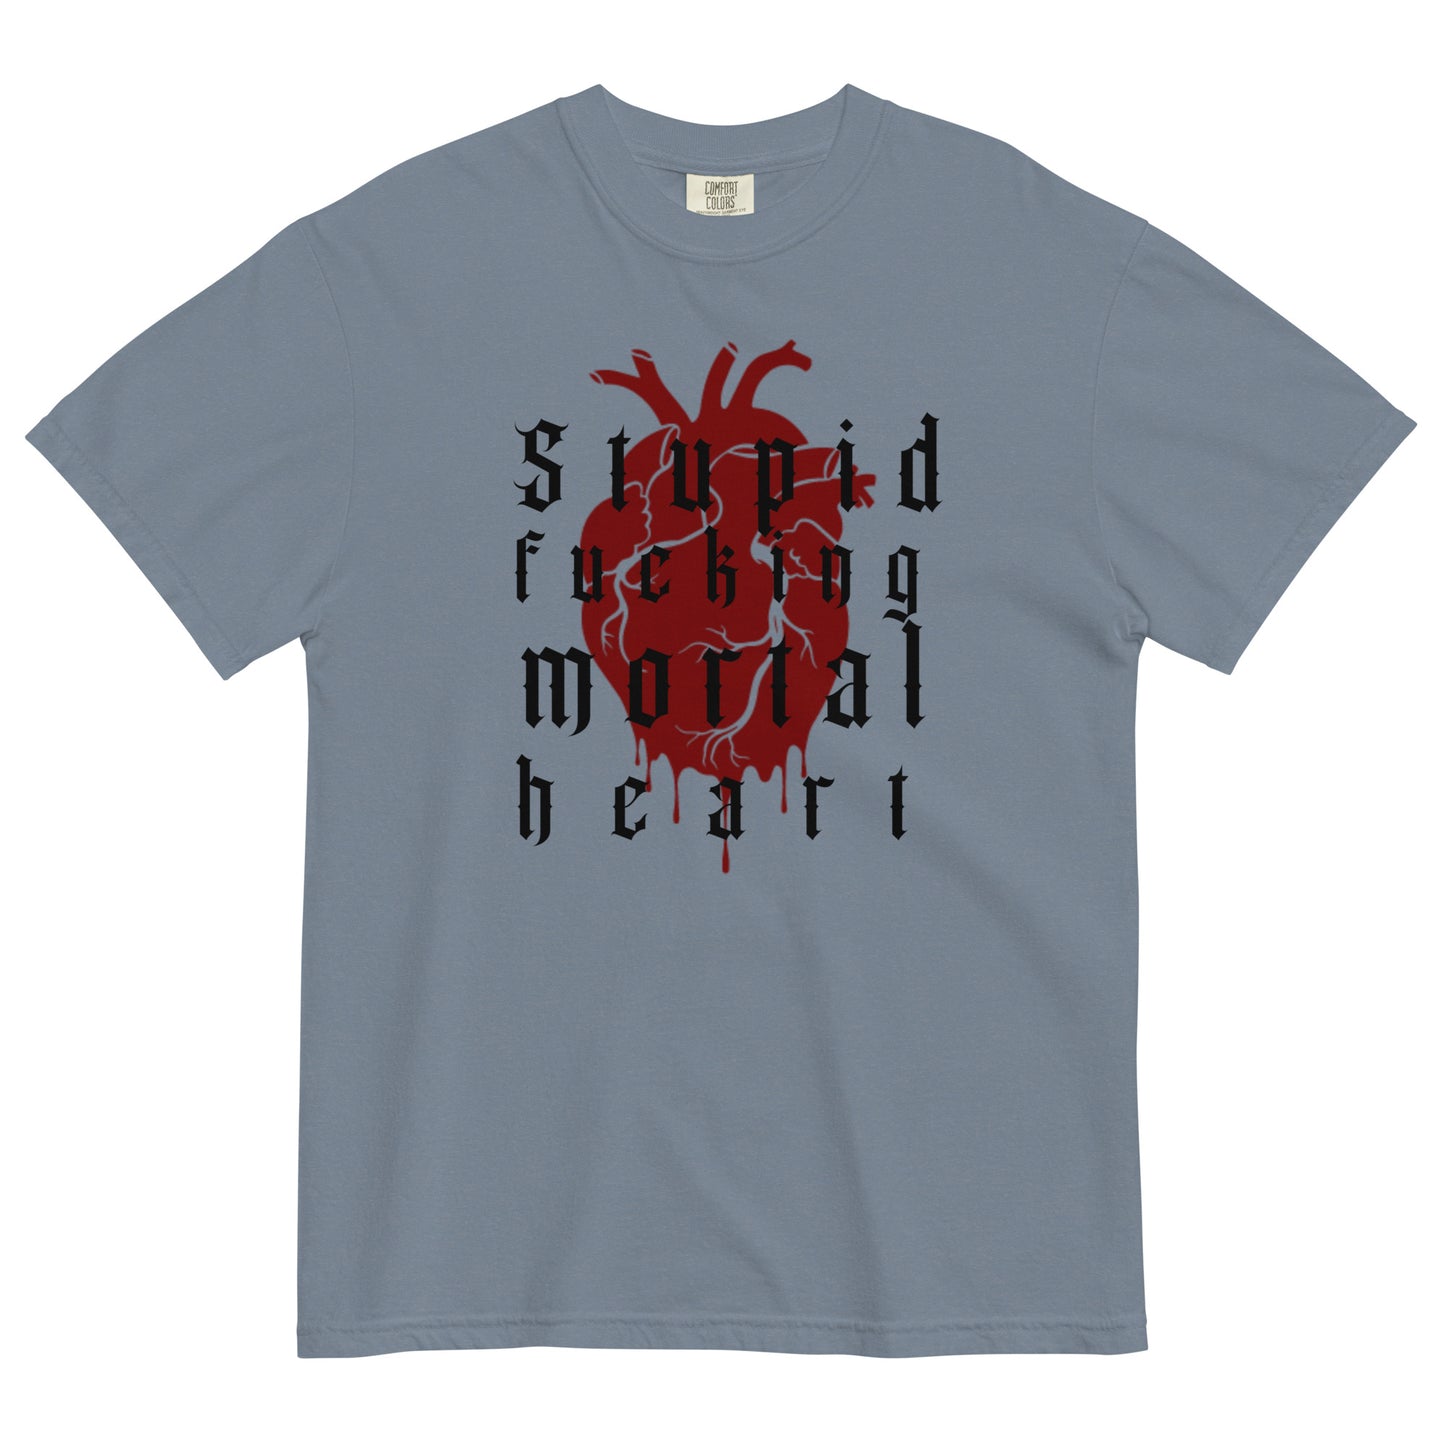 OG Stupid F-ing Mortal Heart heavyweight t-shirt